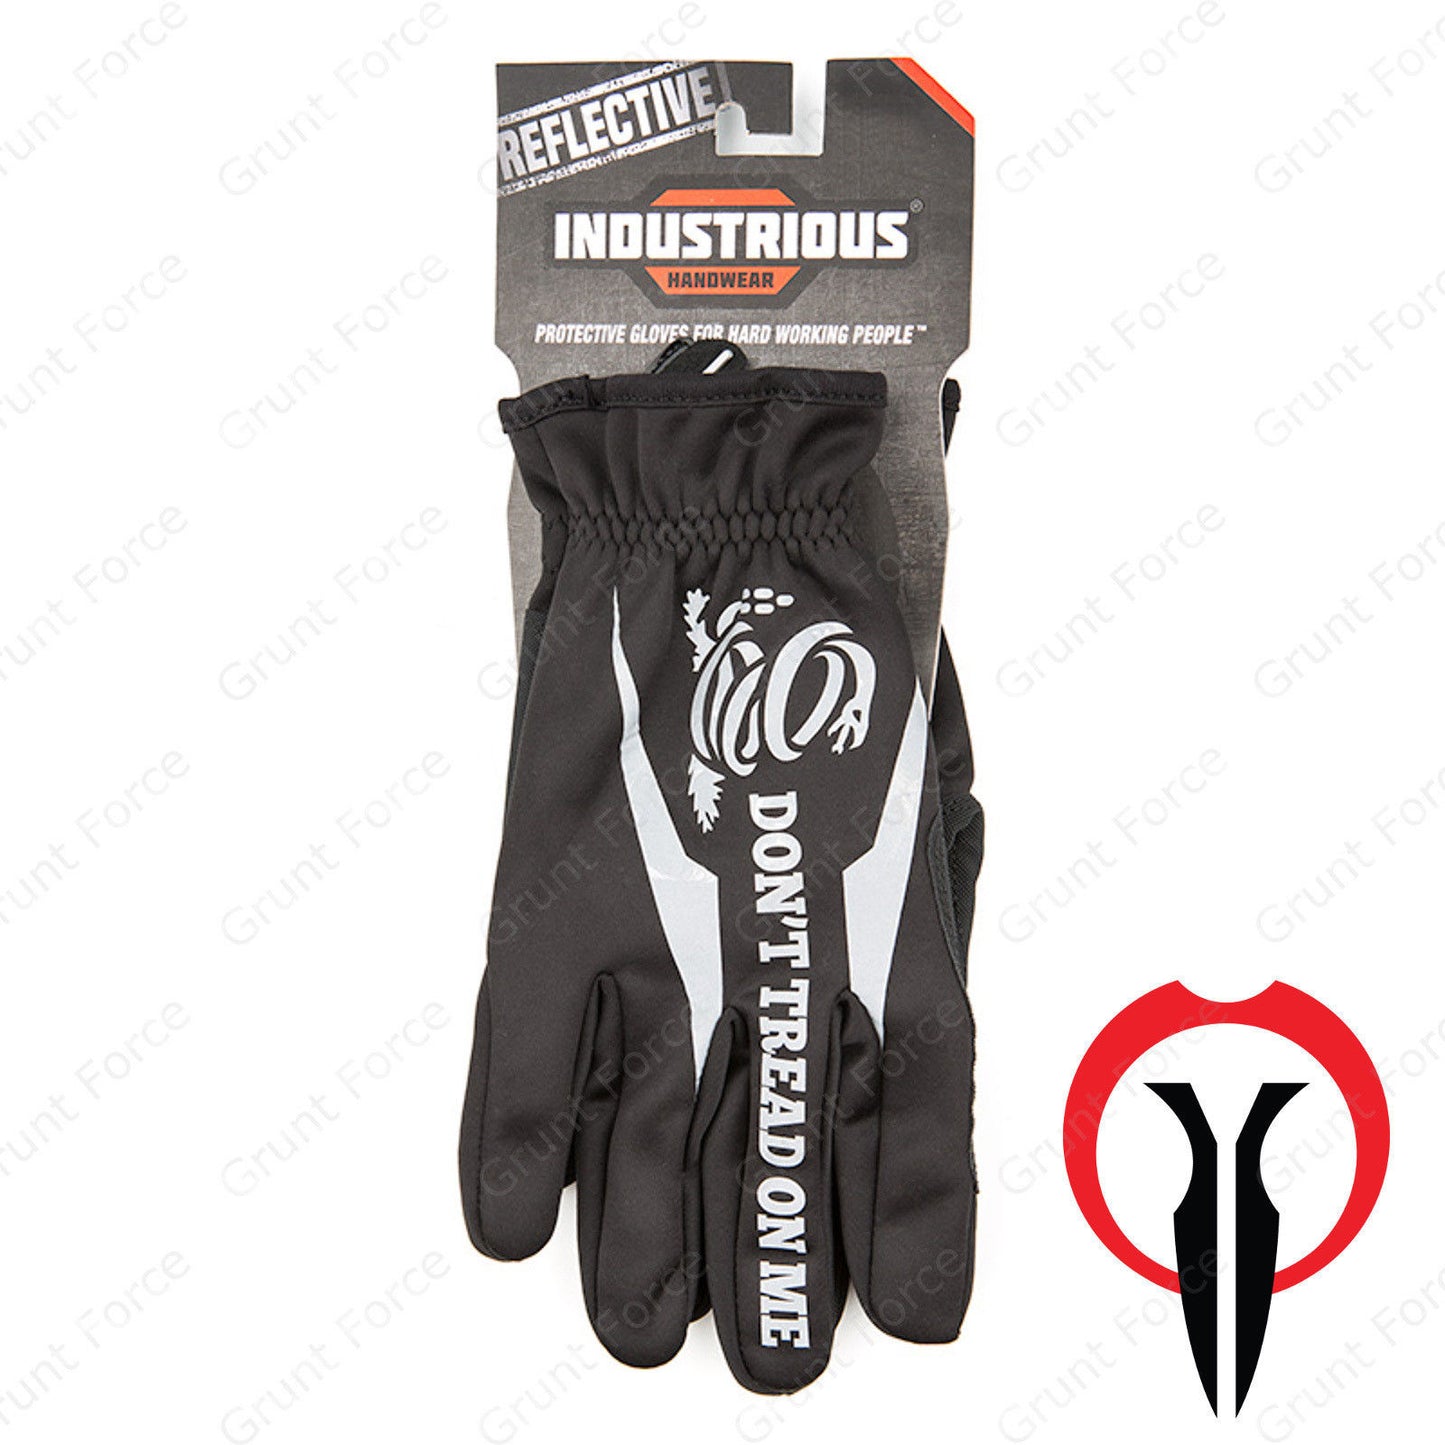 Industrious Handwear Black Full Finger "Don't Tread On Me" Reflective Gloves